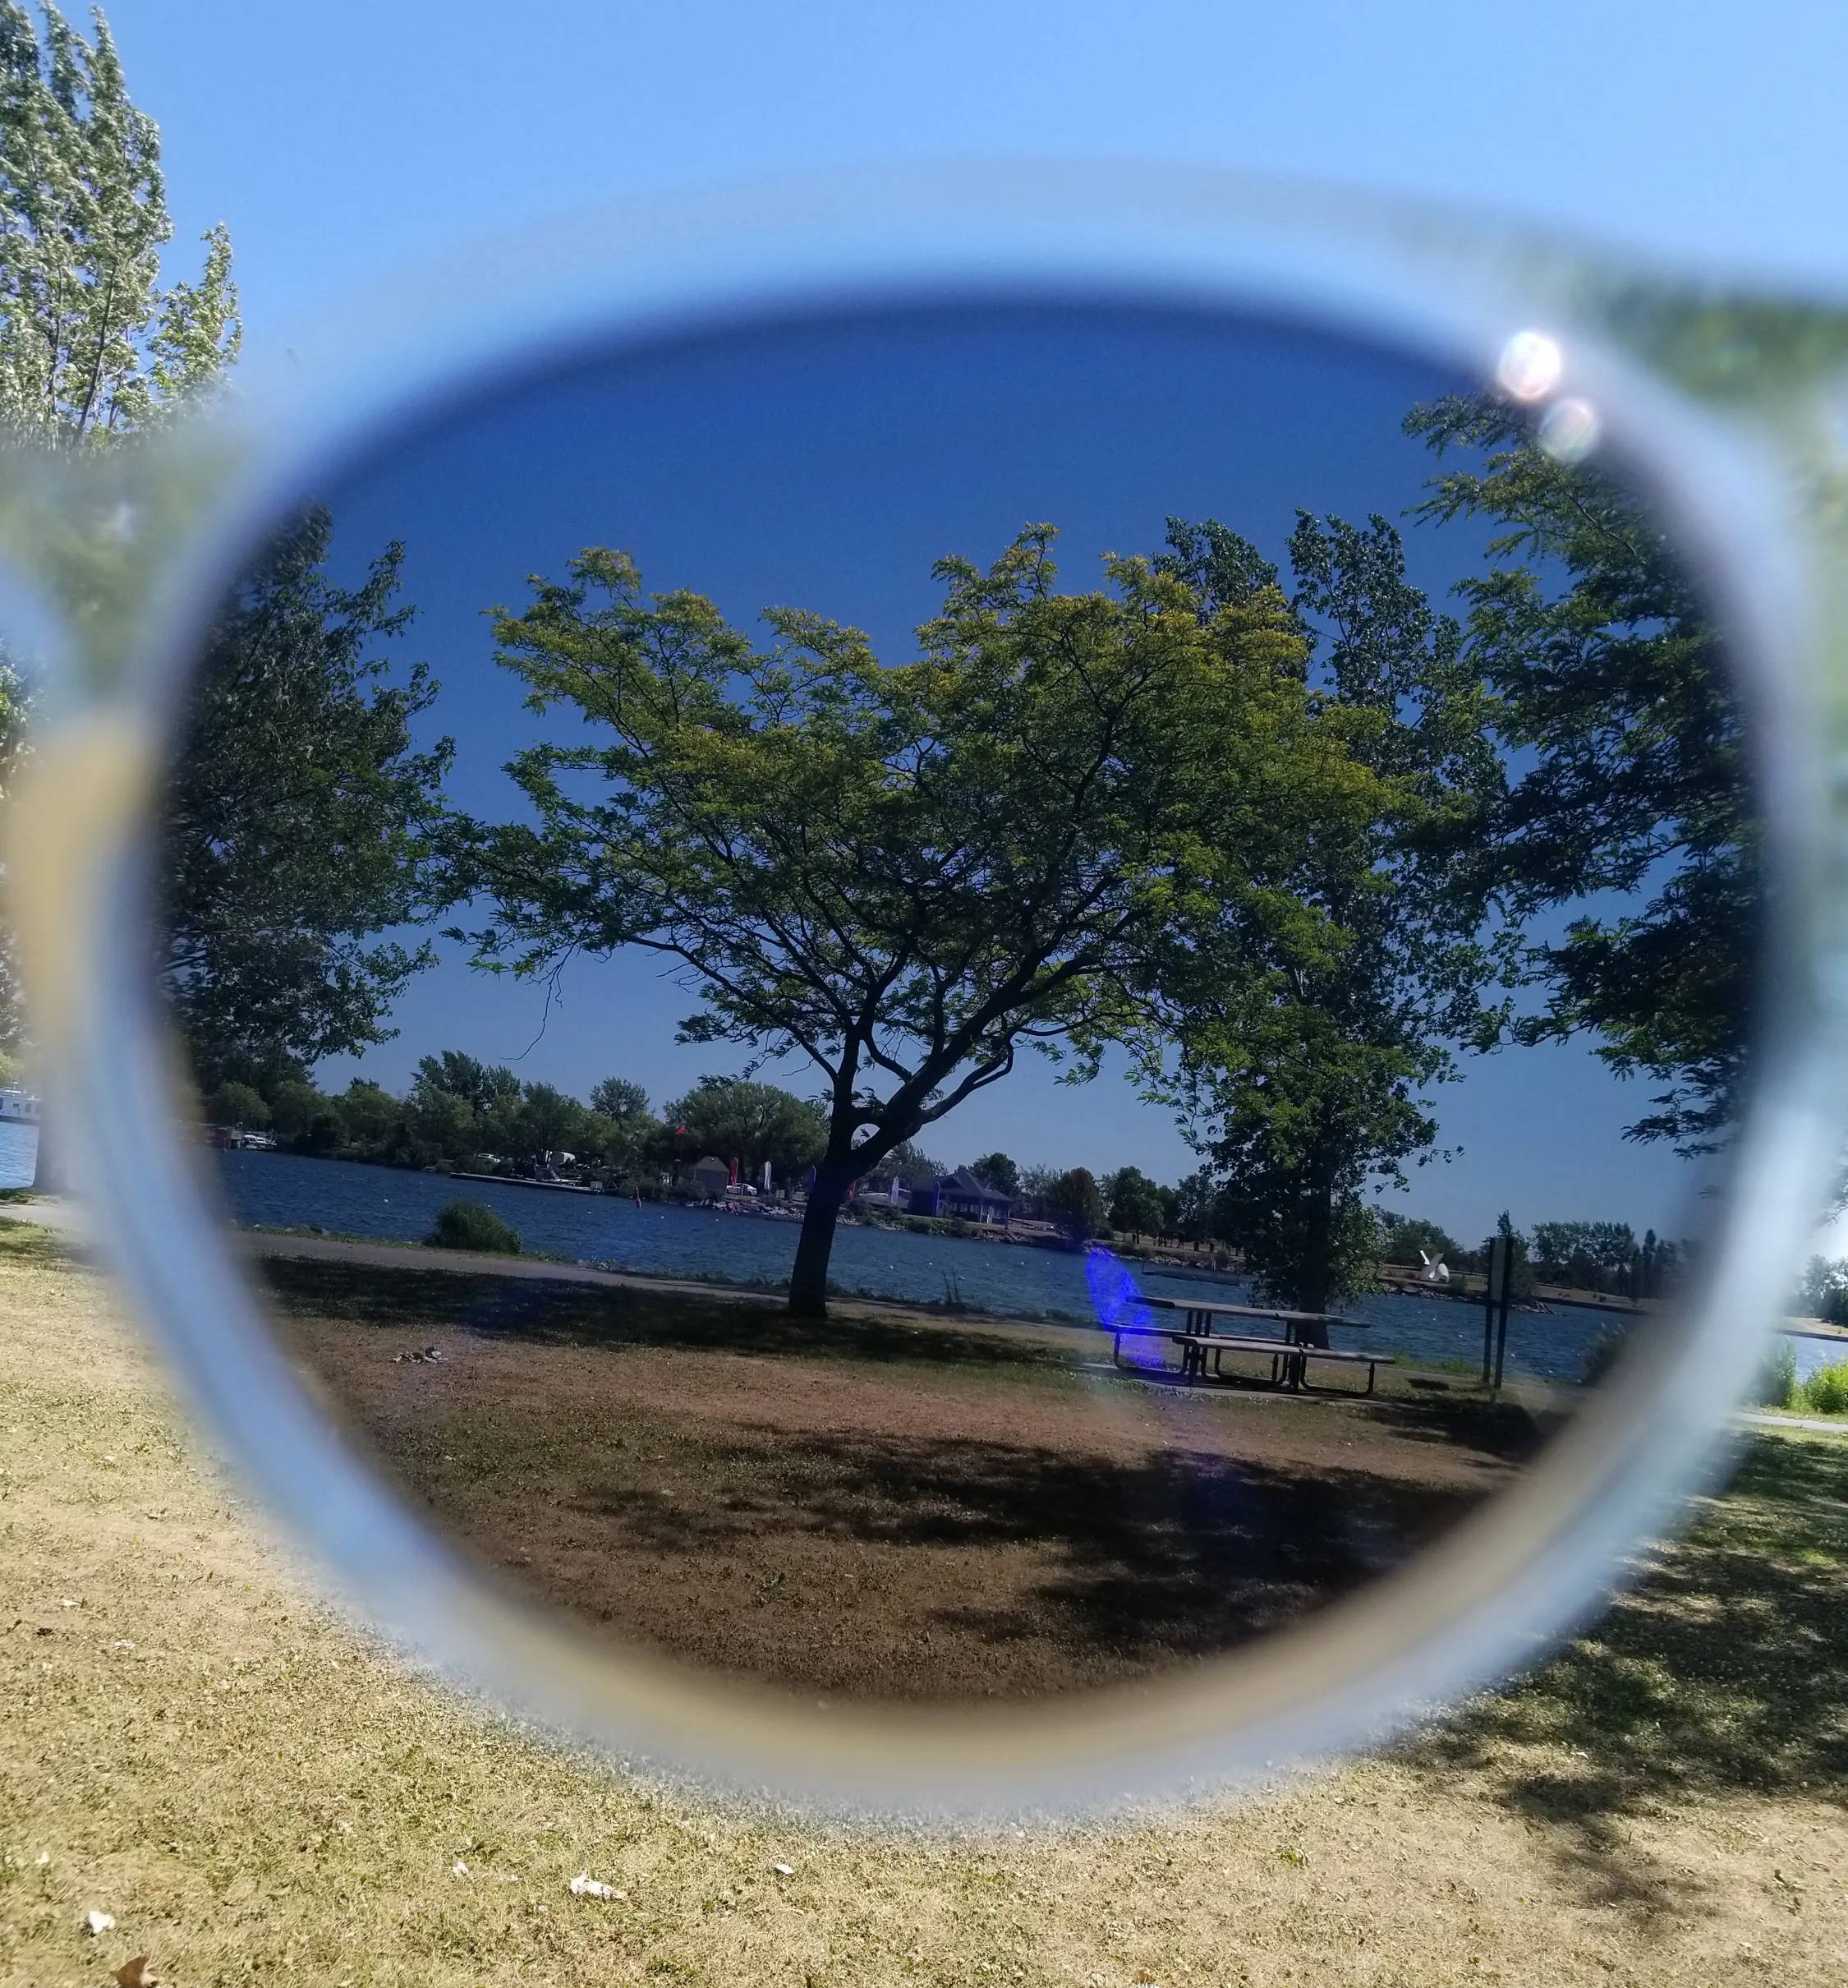 Lake Scenery through tinted polarized sunglasses lens